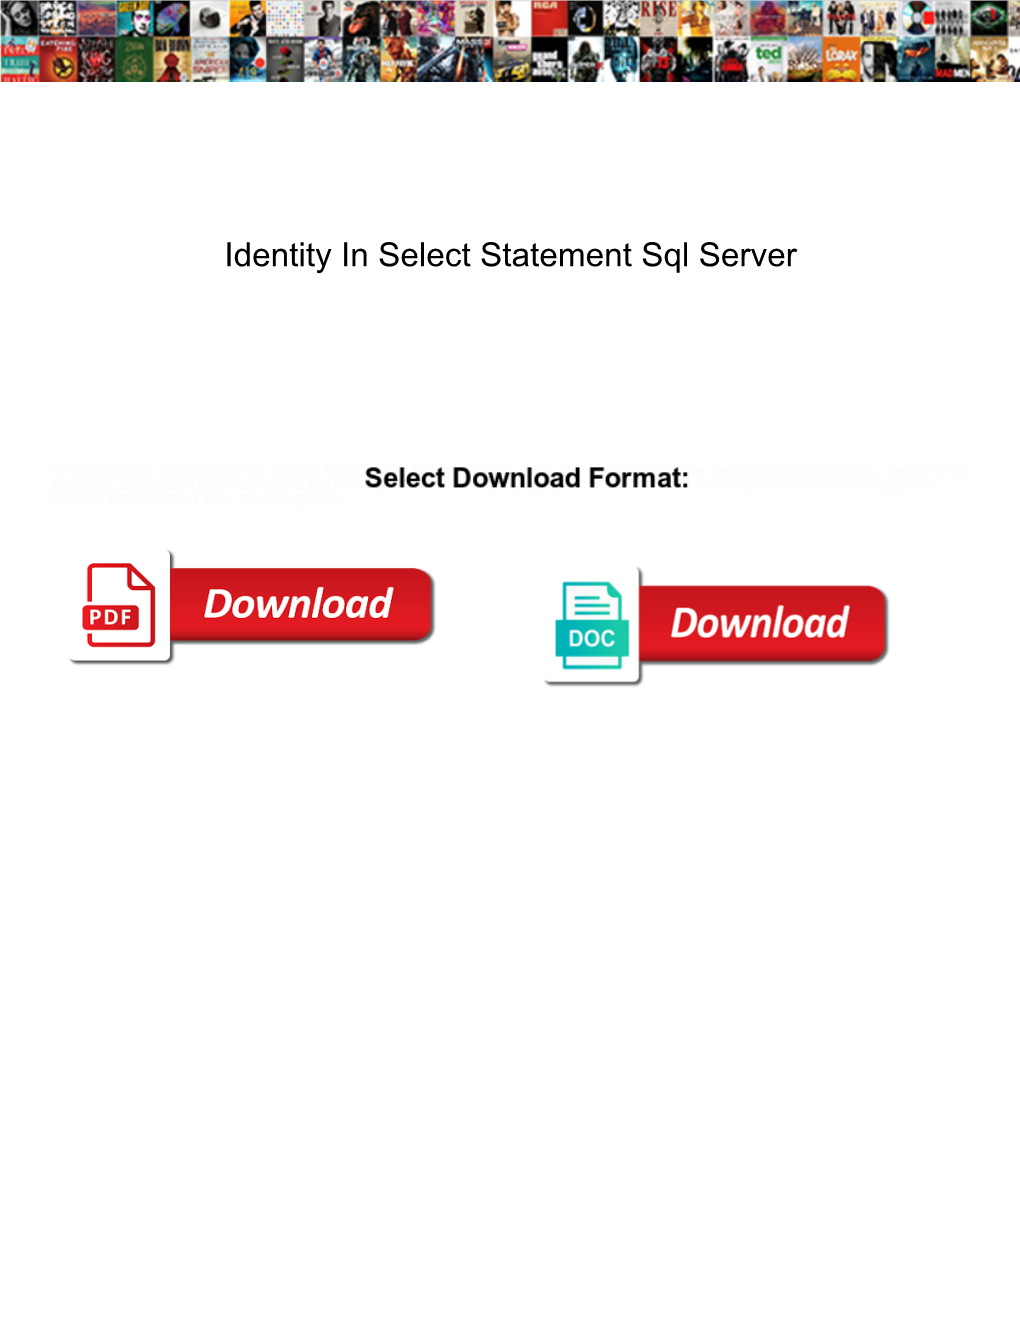 Identity in Select Statement Sql Server